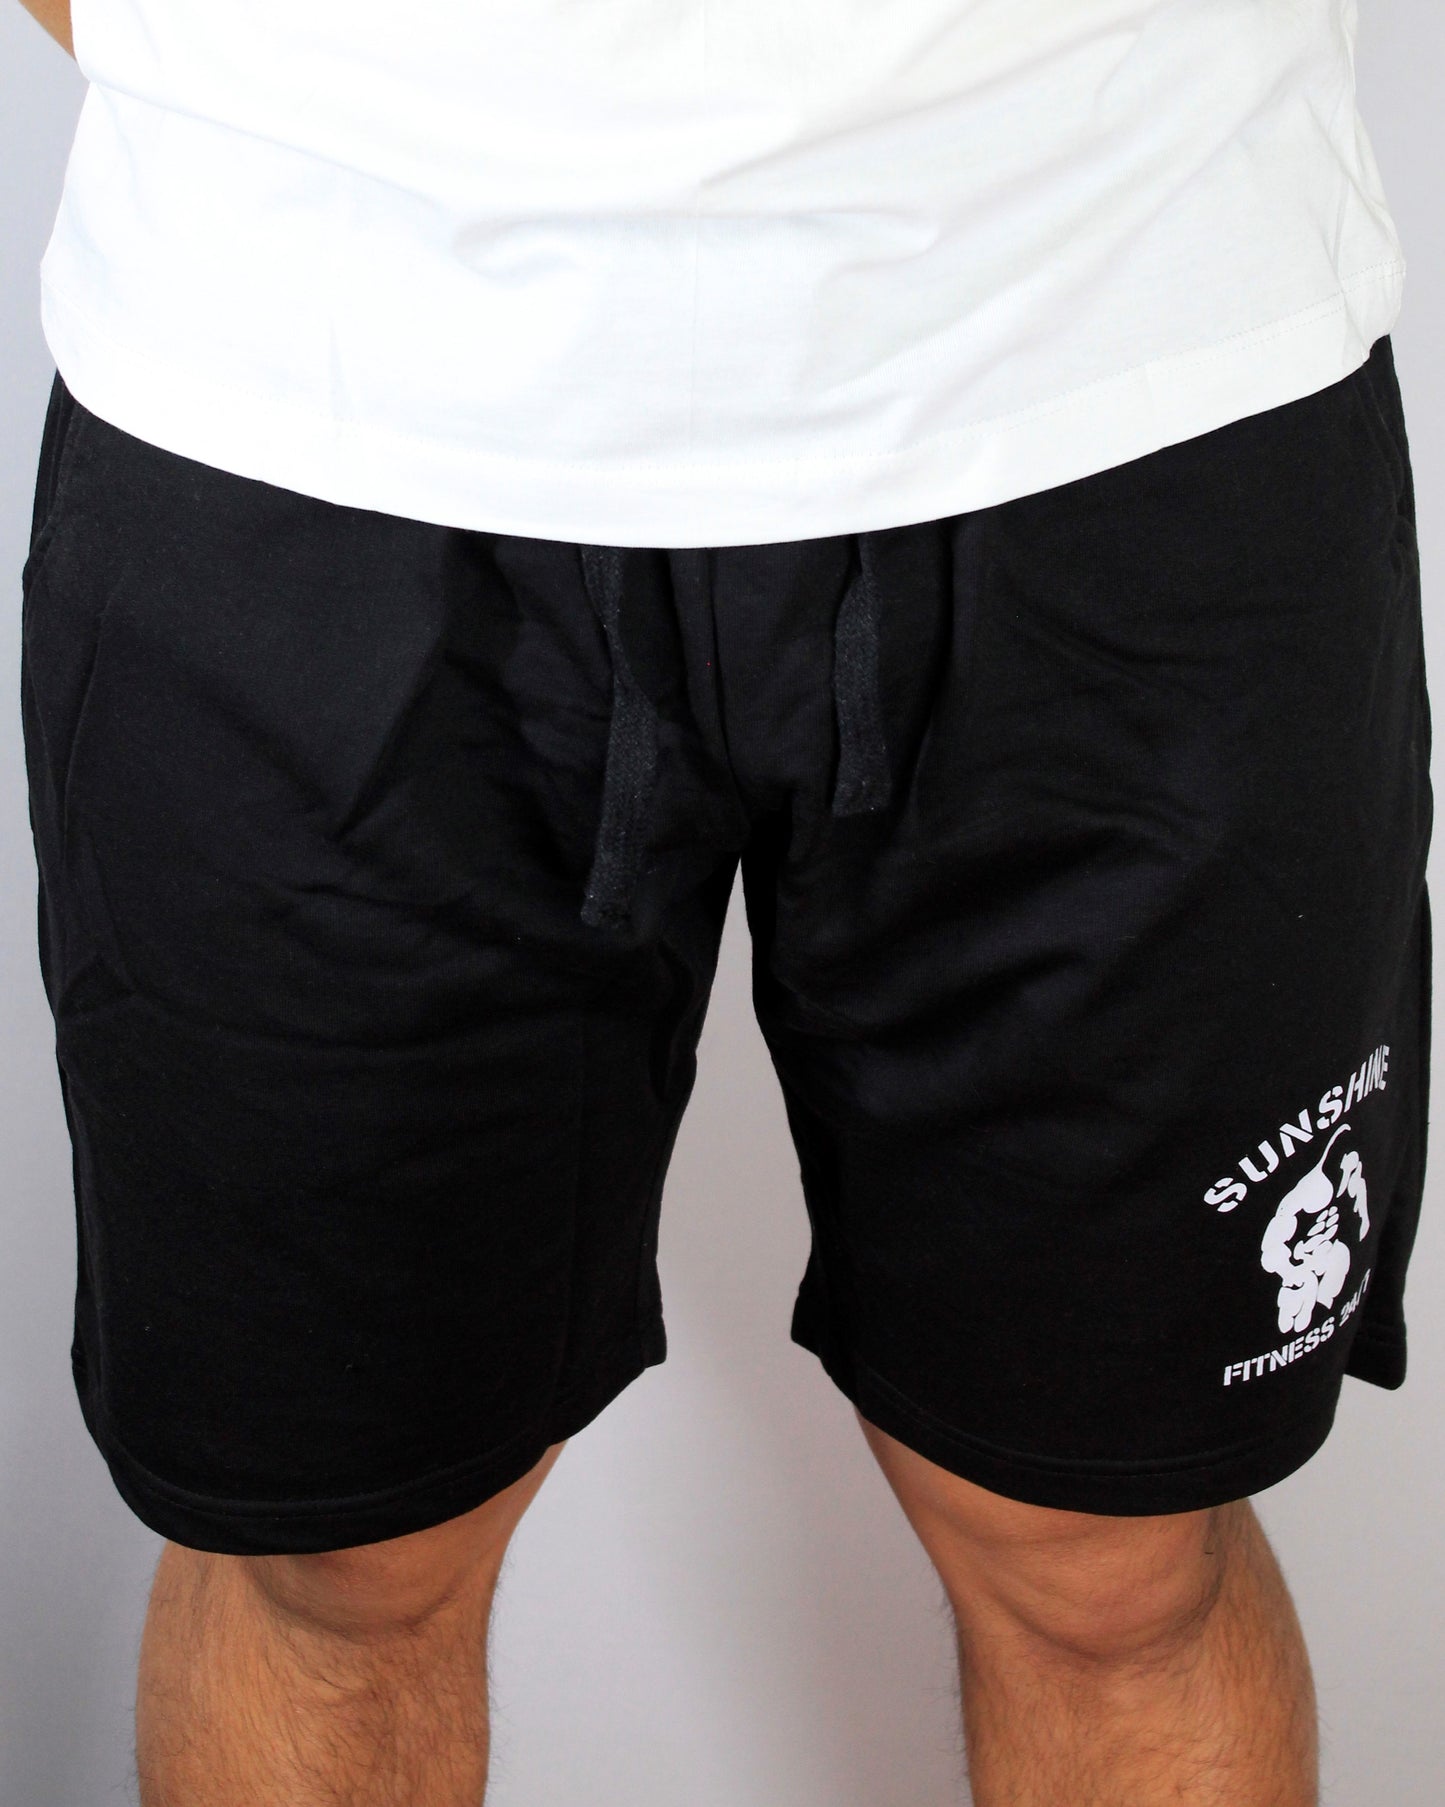 Shorts (sunshine fitness 24/7 print in round)